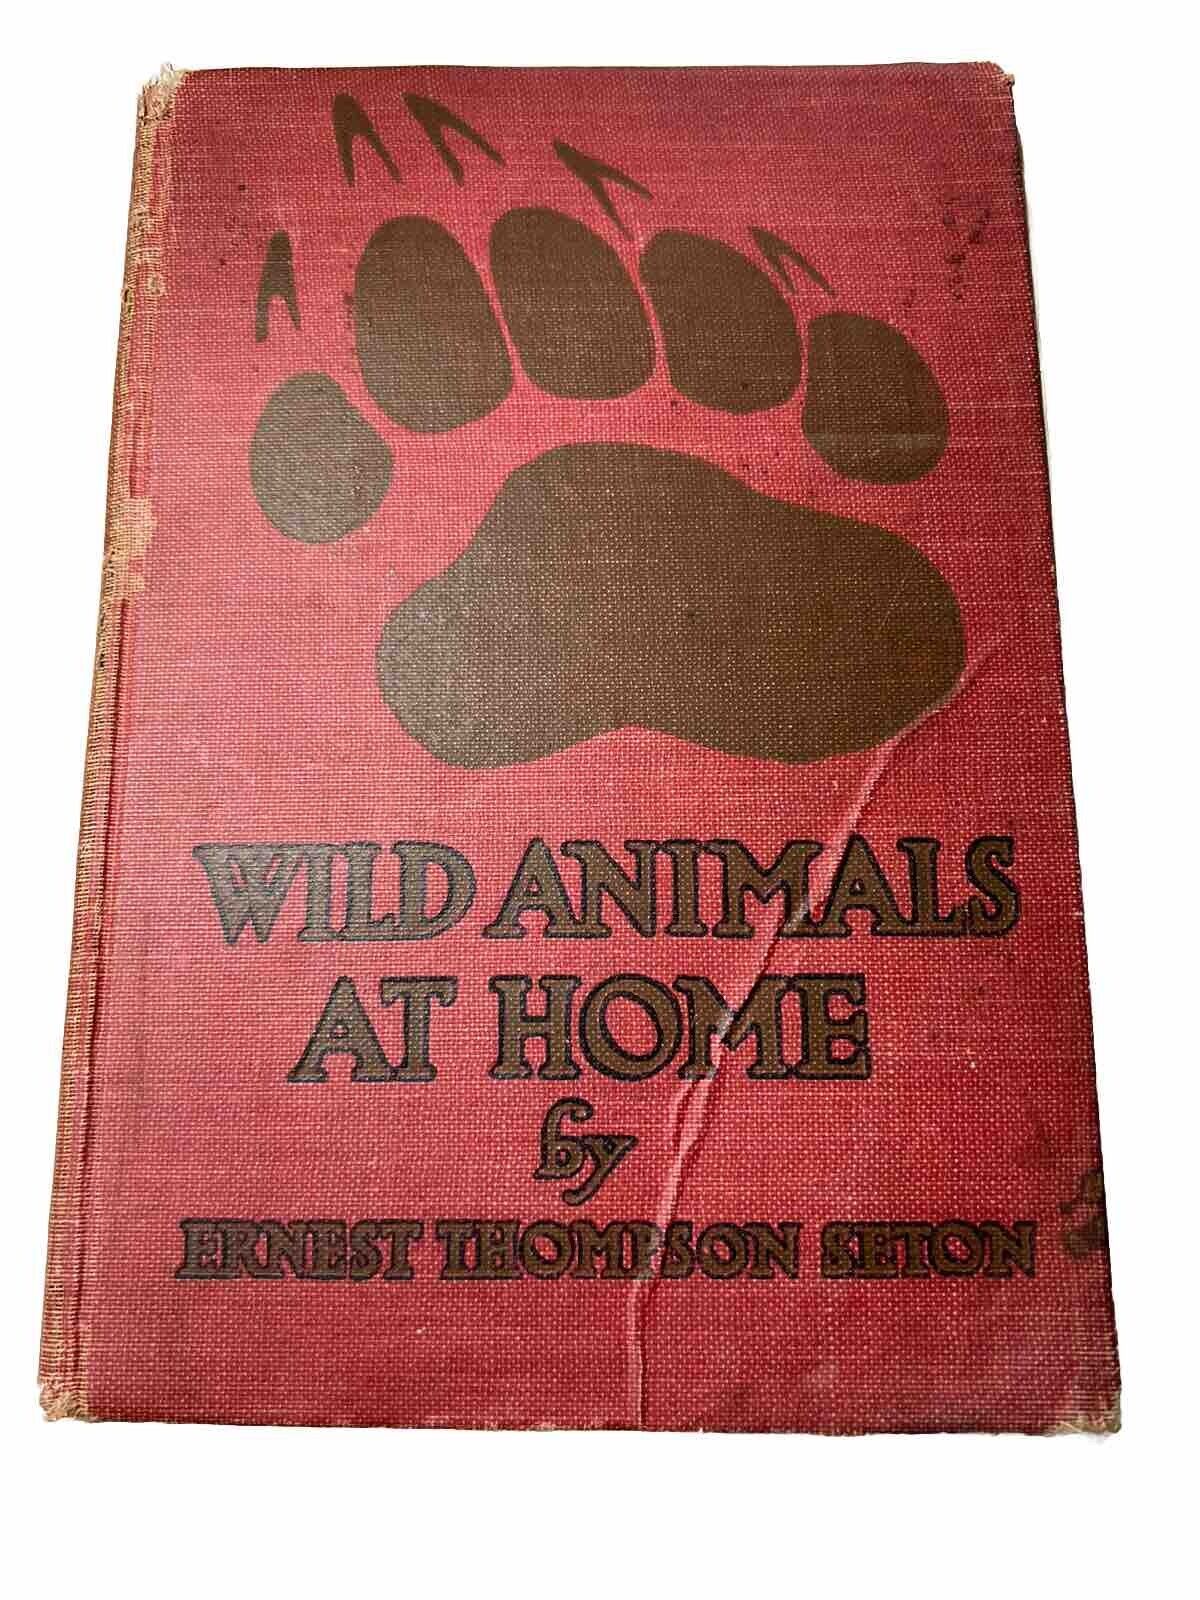 BSA Wild Animals At Home by Ernest Thompson Seton Hardback 1913 BS-863